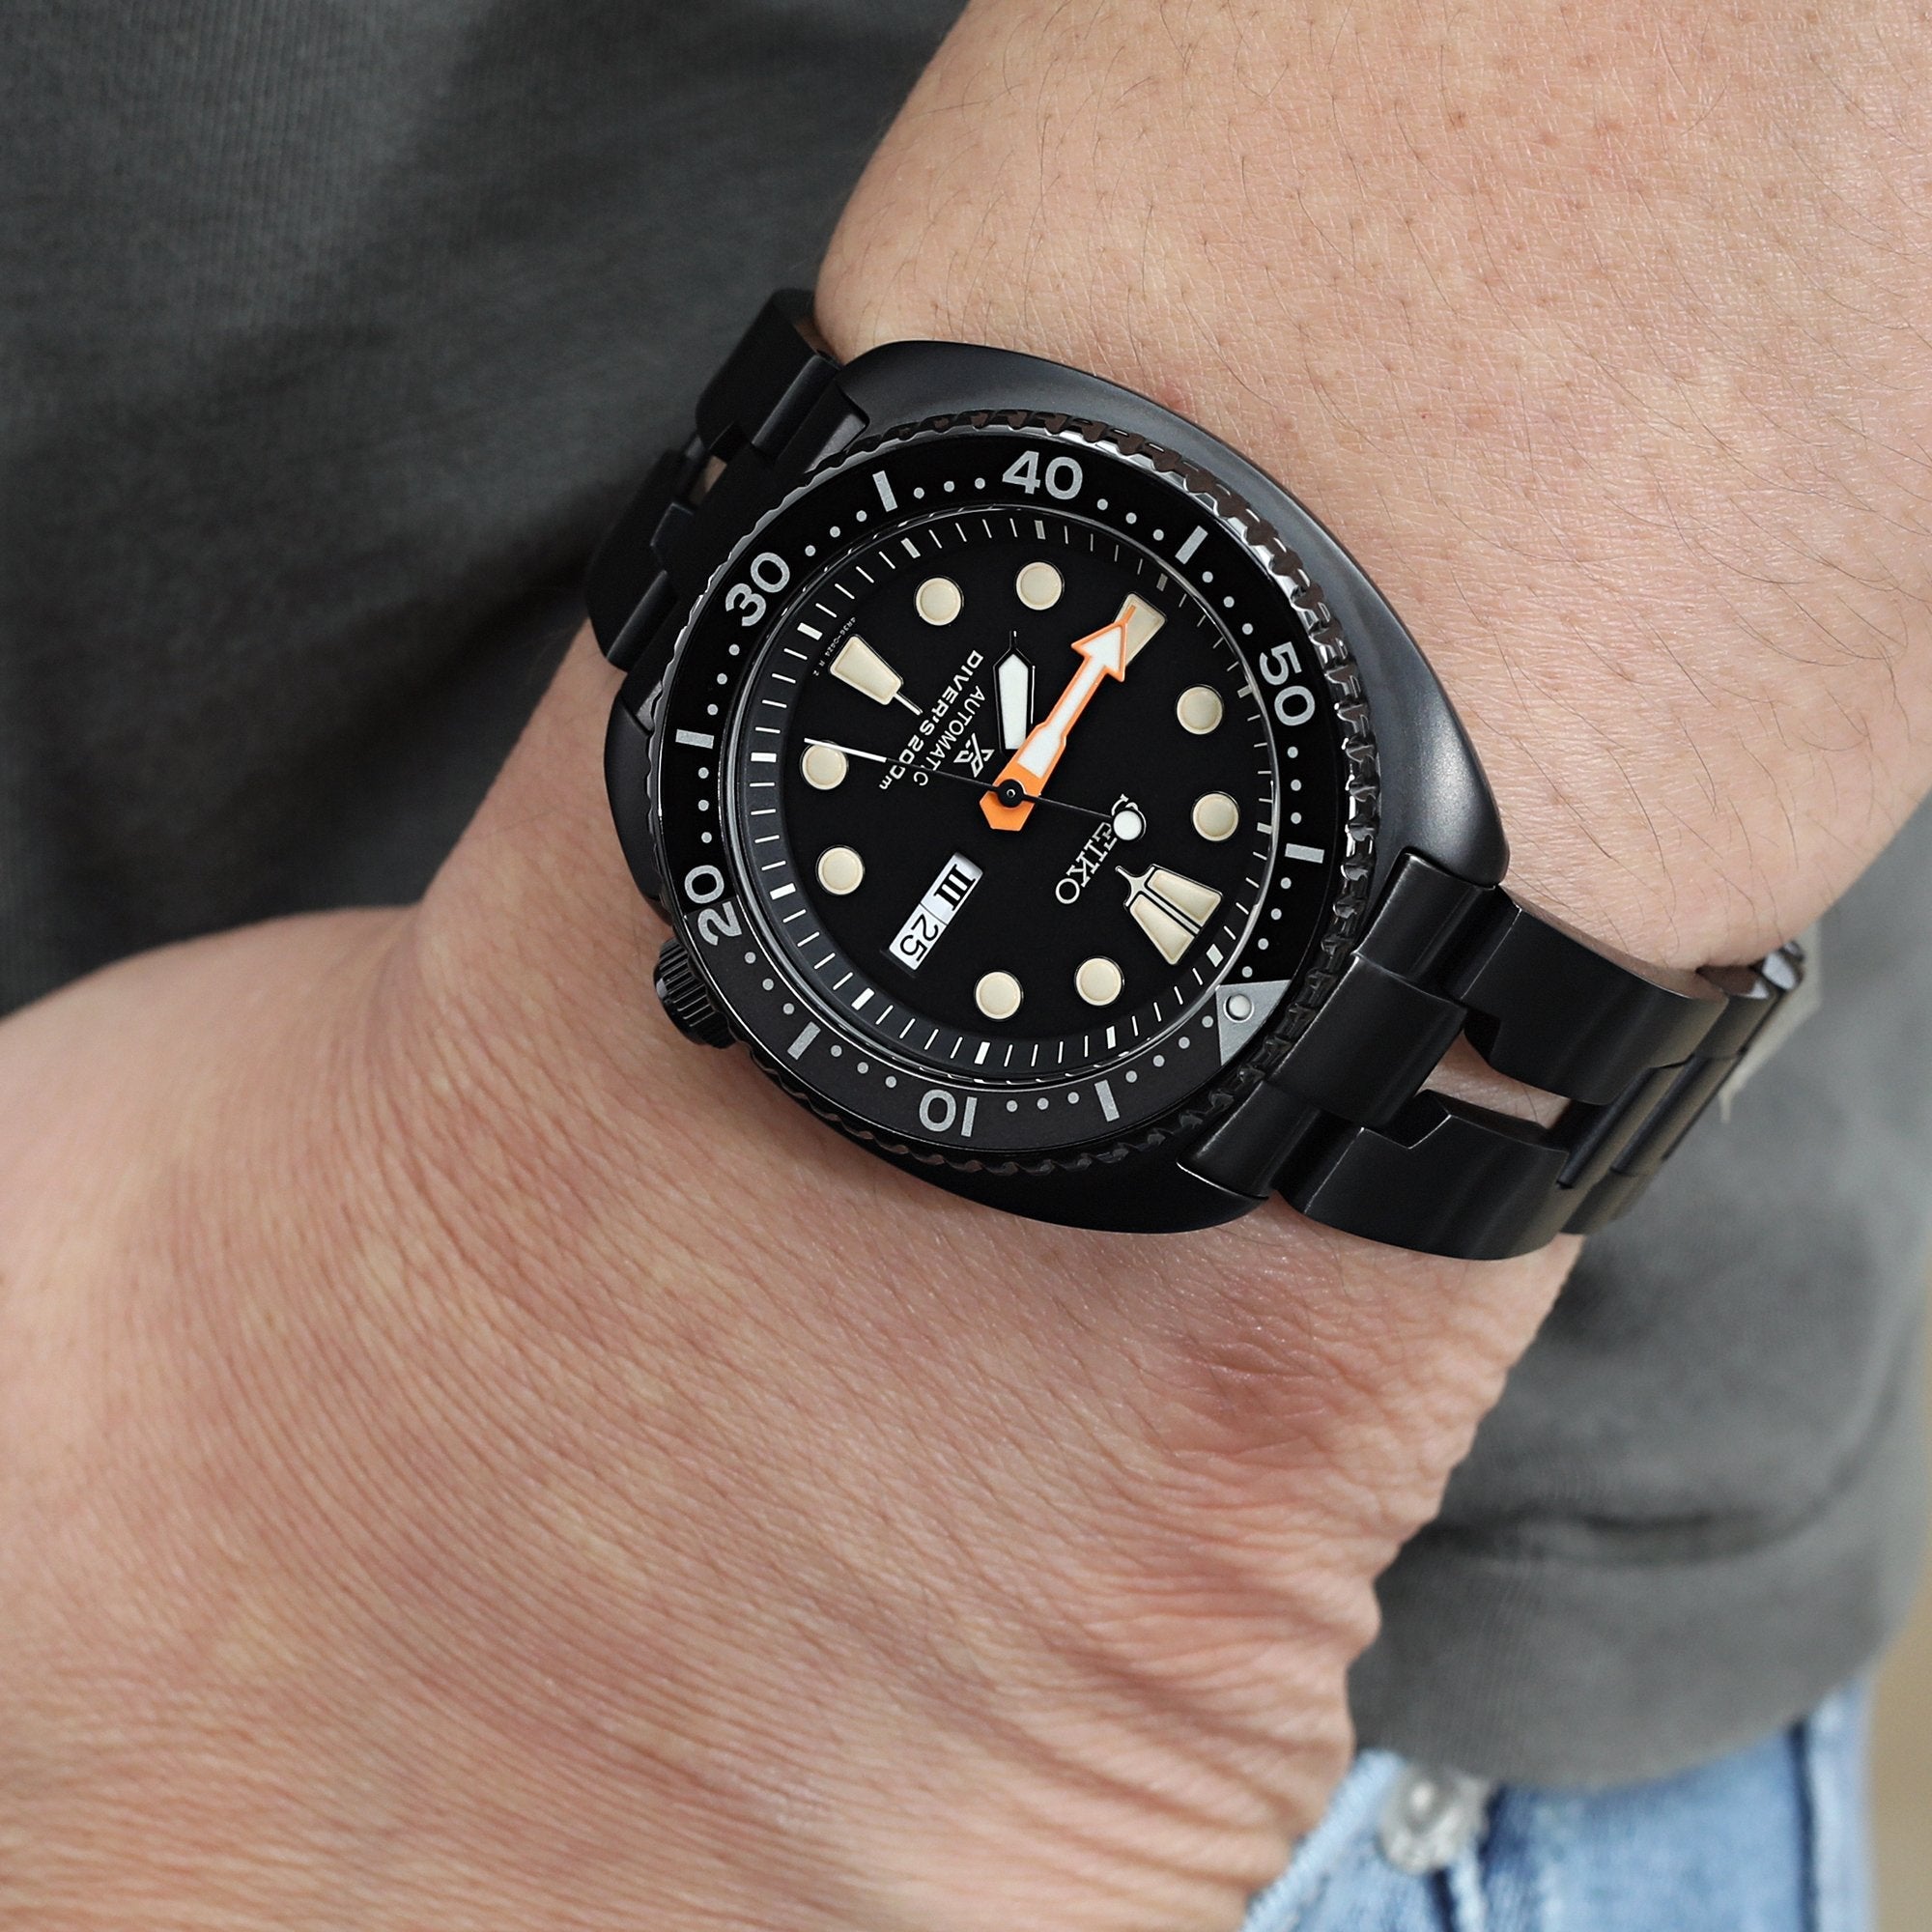 A black Seiko New Turtle watch definitely needs a Razor watch band by Strapcode 